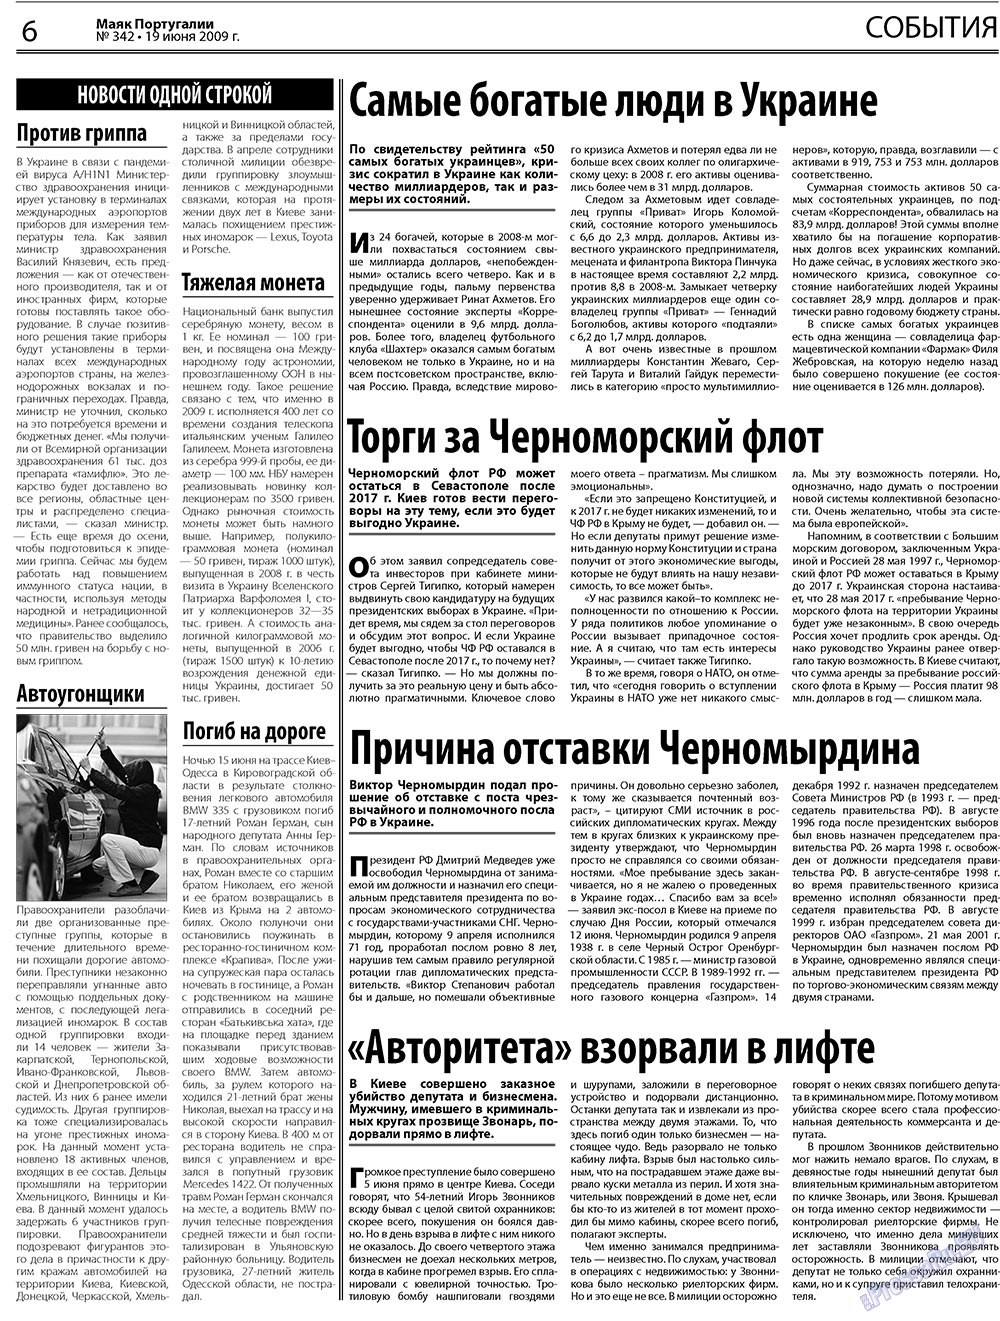 Маяк Португалии, газета. 2009 №24 стр.6